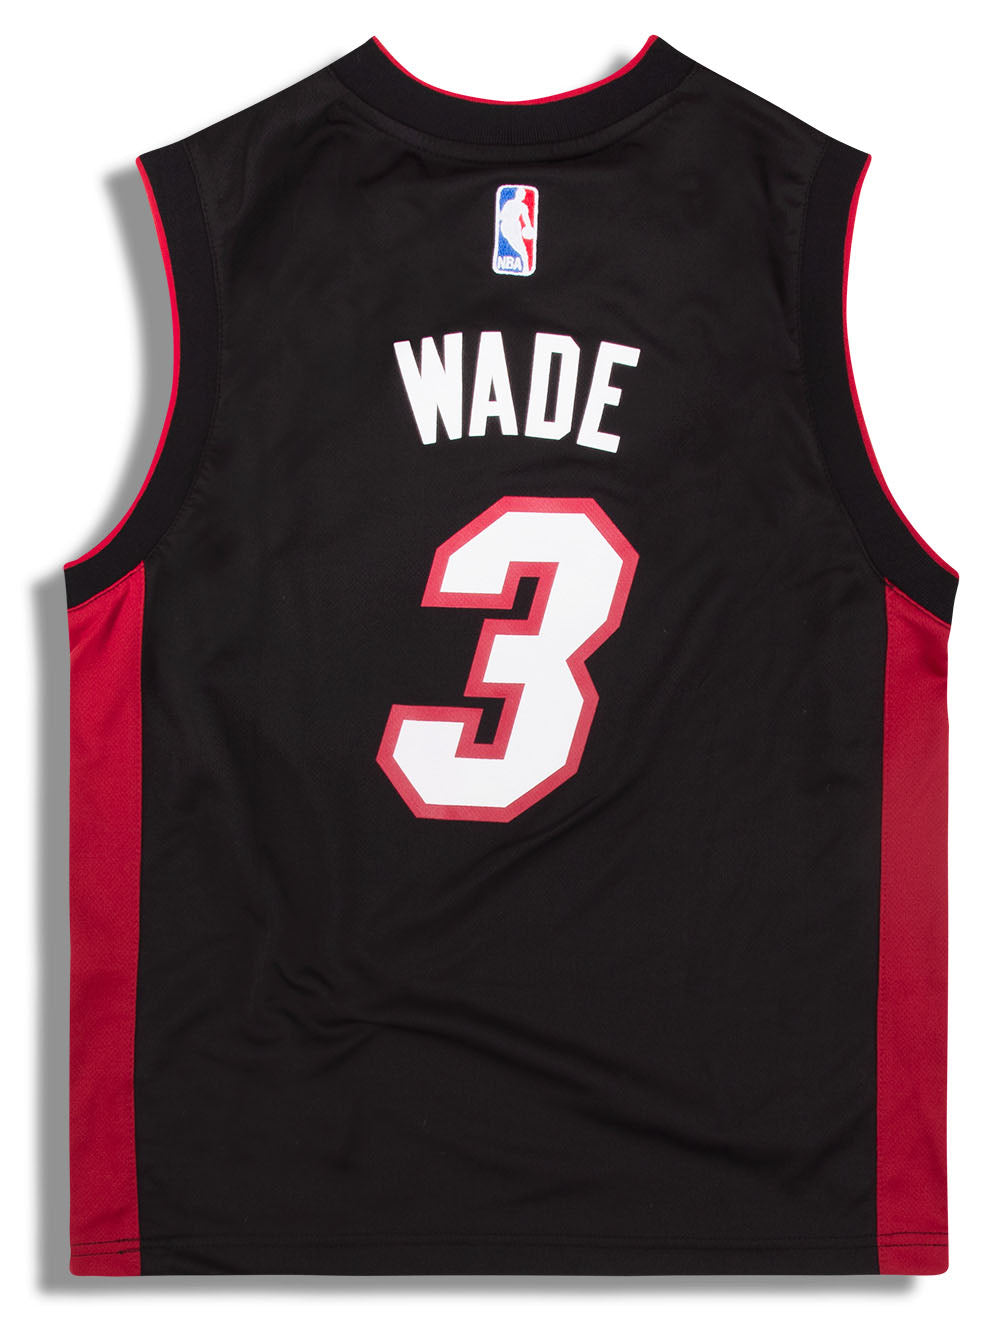 Dwayne Wade Miami Heat Adidas Red NBA Baskedtball Jersey #3 Size 56